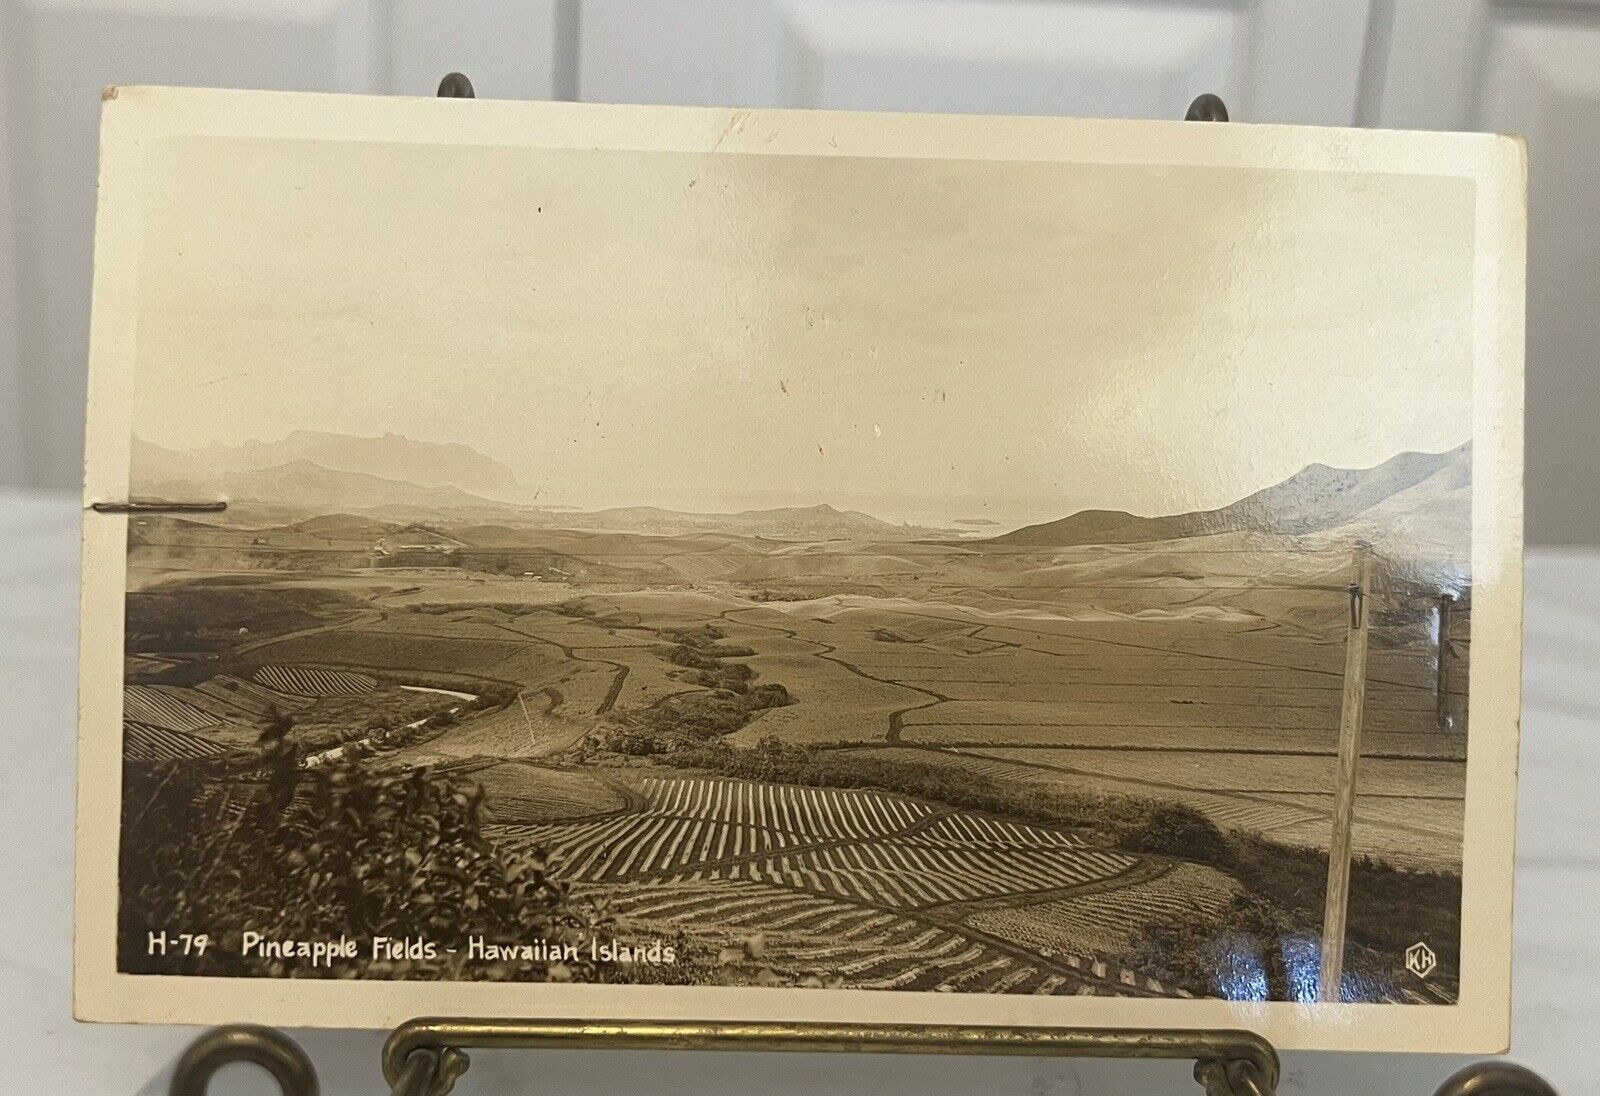 Rare Vintage Pineapple Fields Hawaiian Islands Hawaii Postcard Has Been Stapled